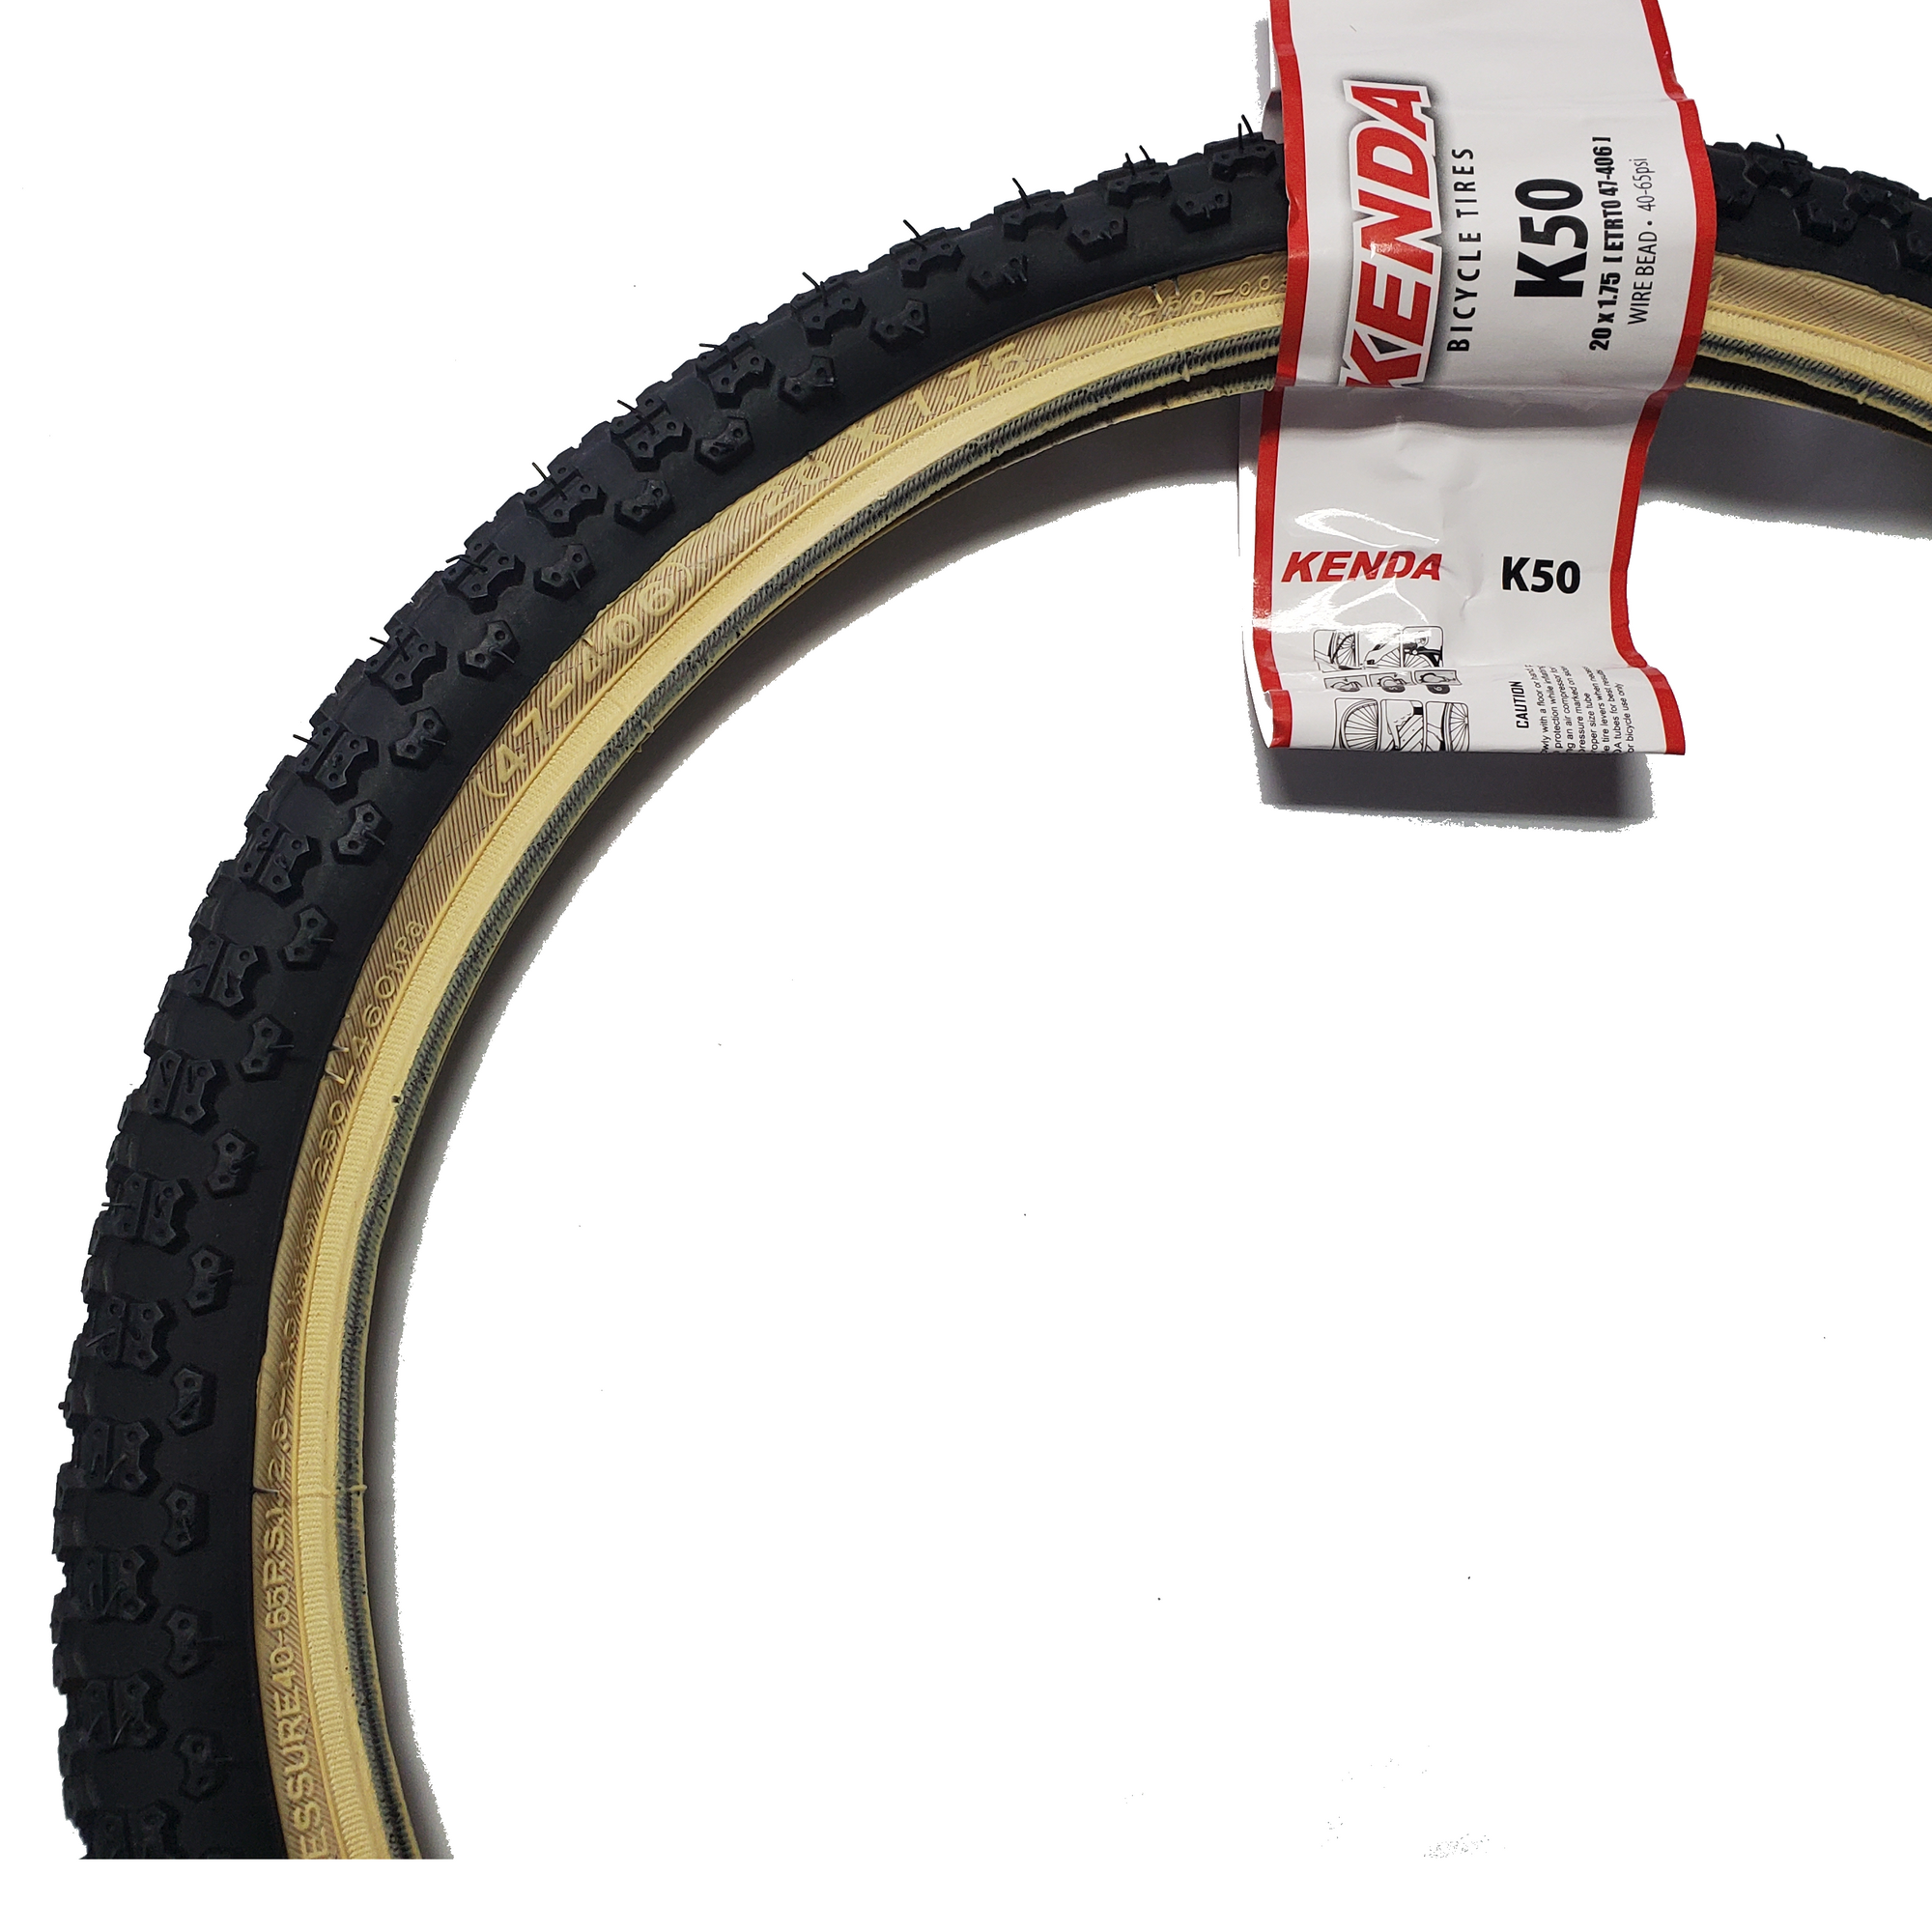 20x1.75 Kenda Comp III 3 style BMX tire - Black w/ Light Skinwall - single